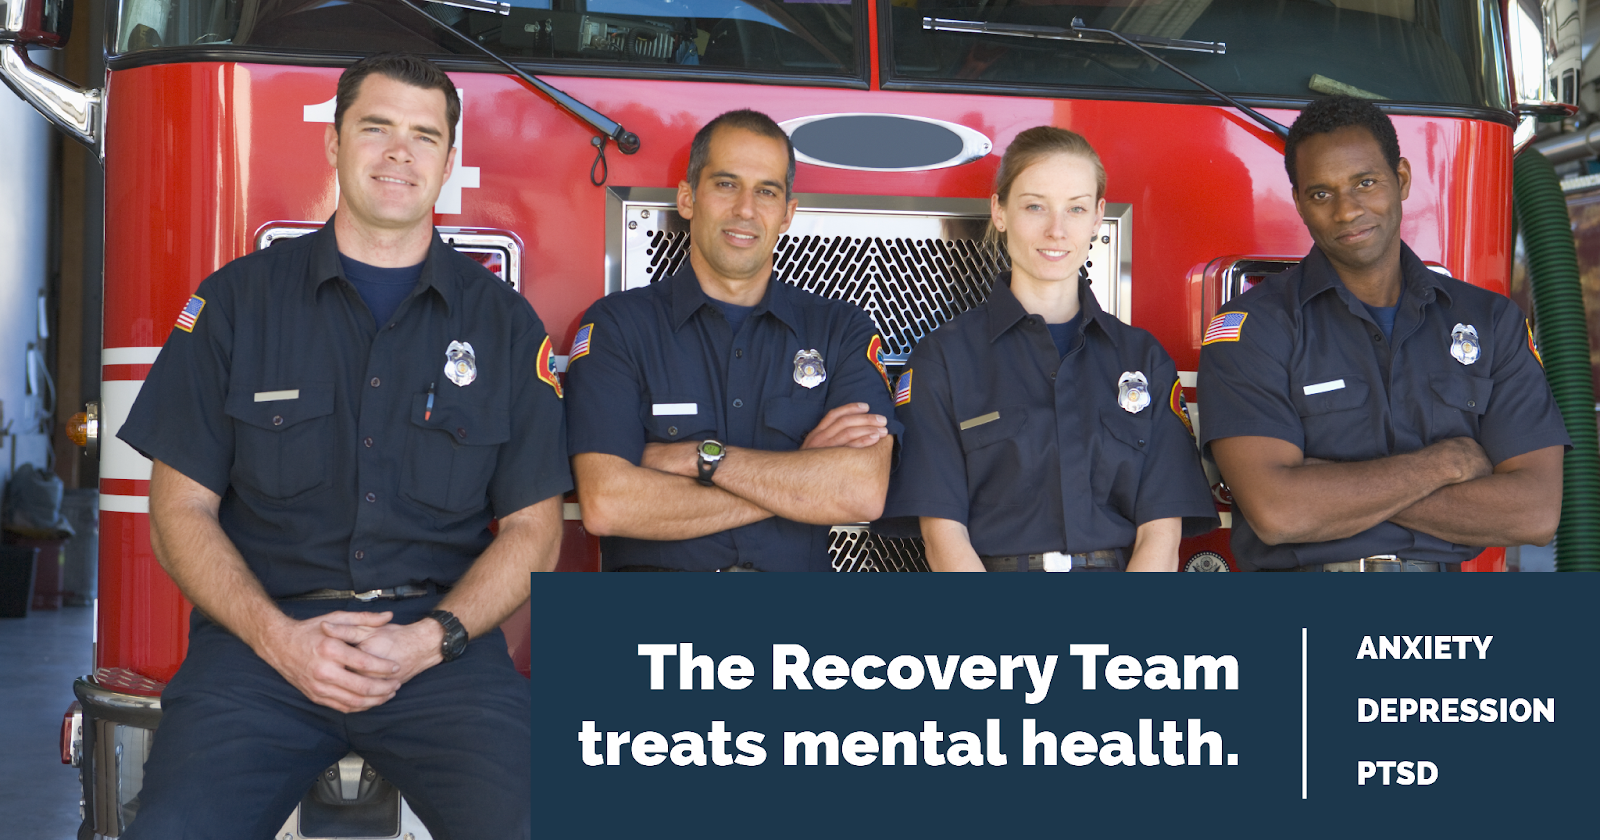 the recovery team treats mental health. anxiety depression ptsd